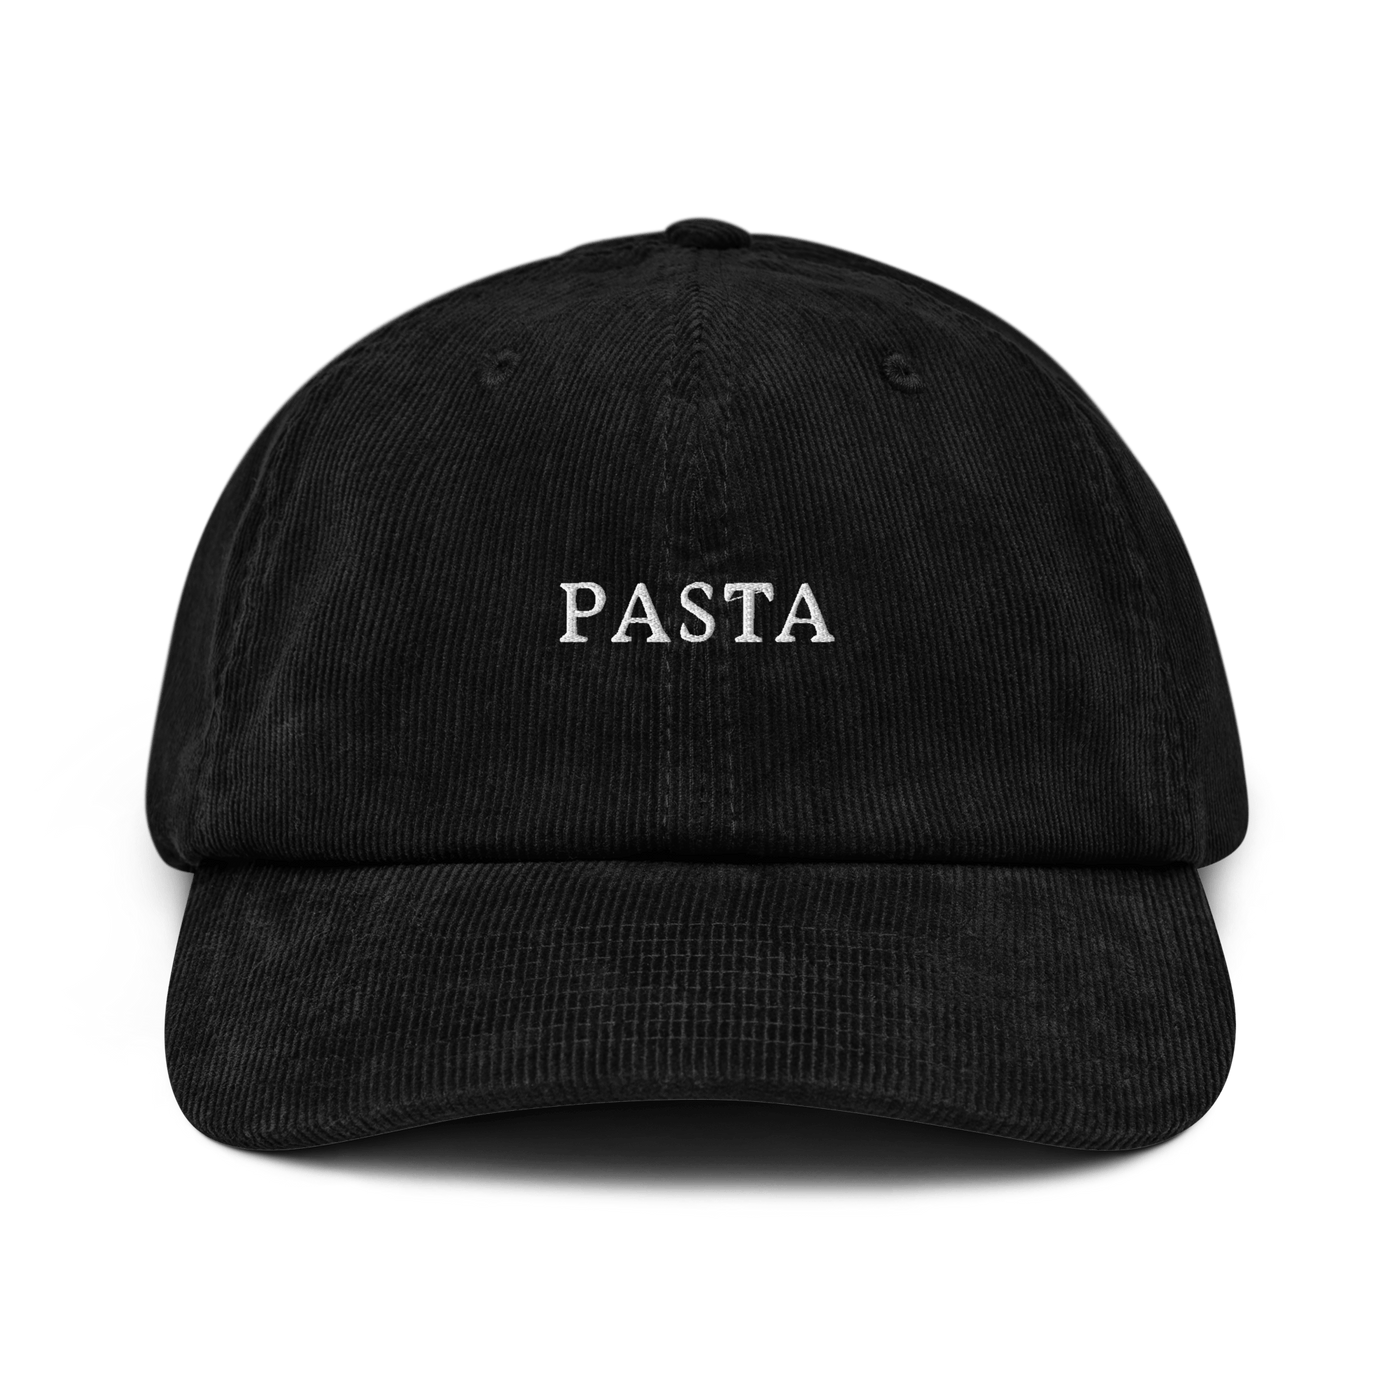 Pasta Corduroy hat - Black - - Just Another Cap Store